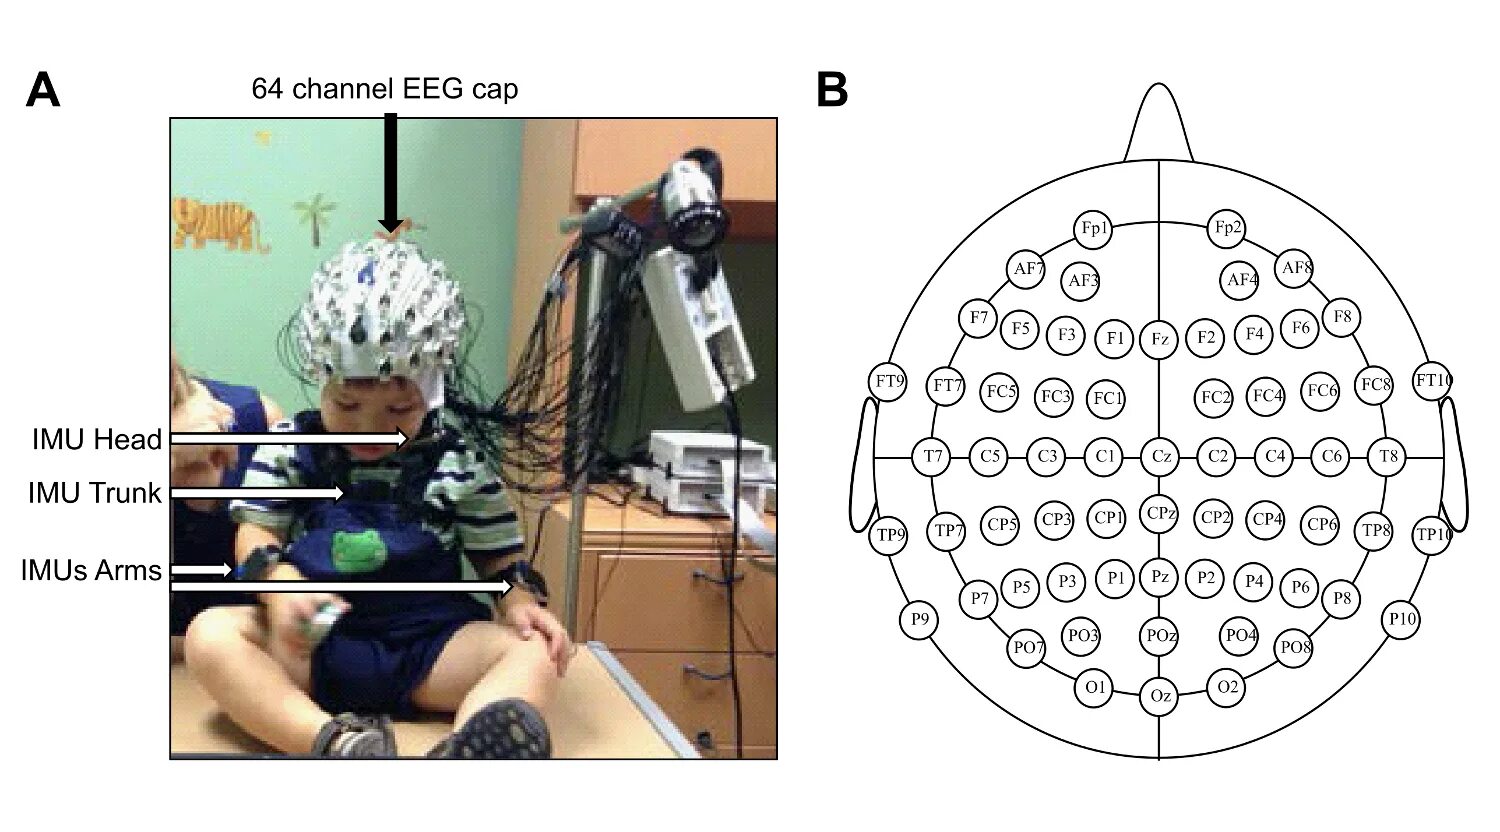 Ээг глаза. Расположение электродов ЭЭГ. ЭЭГ мониторинг головного мозга. ЭЭГ шапочка схема. Электроэнцефалография головного мозга (ЭЭГ).